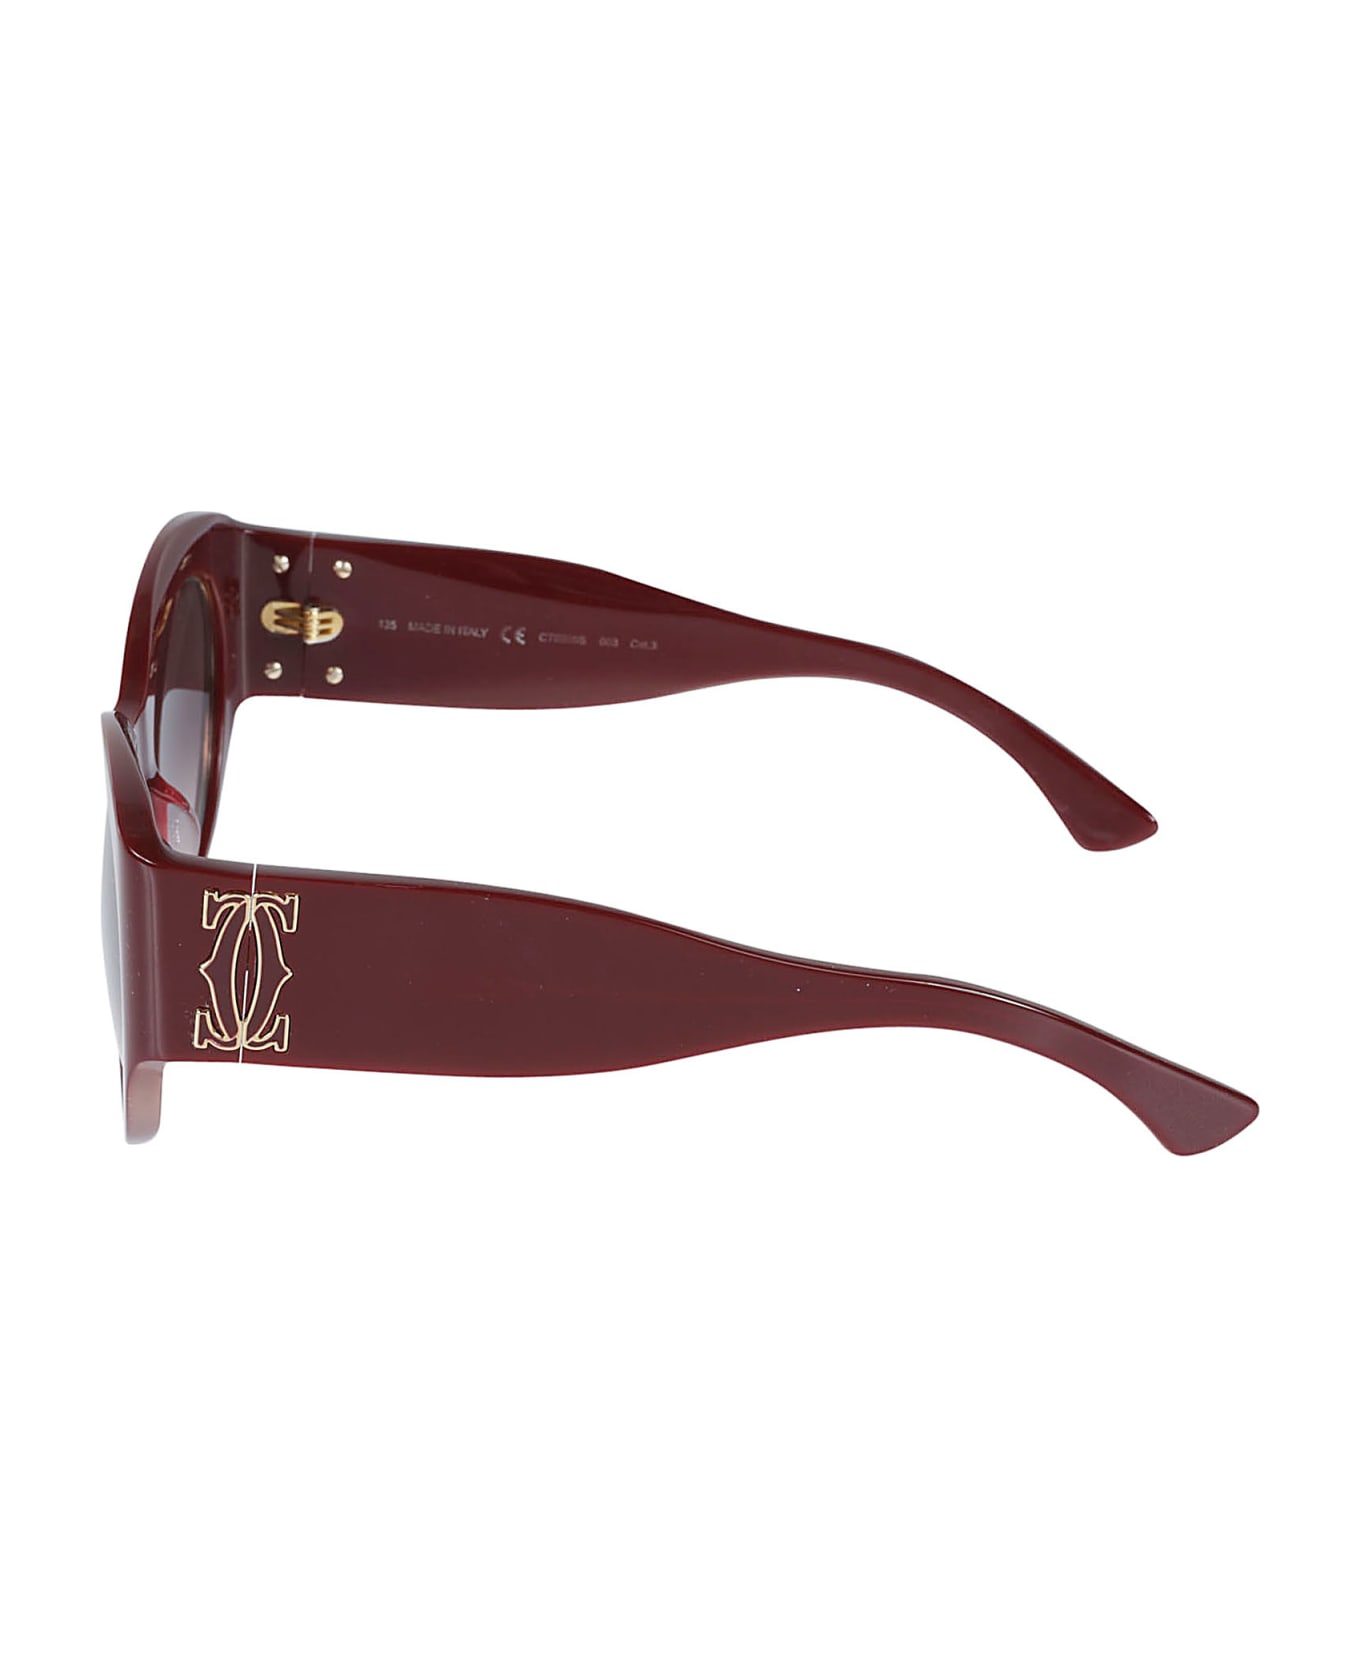 Cartier Eyewear Thick Round Sunglasses - 003 burgundy burgundy red